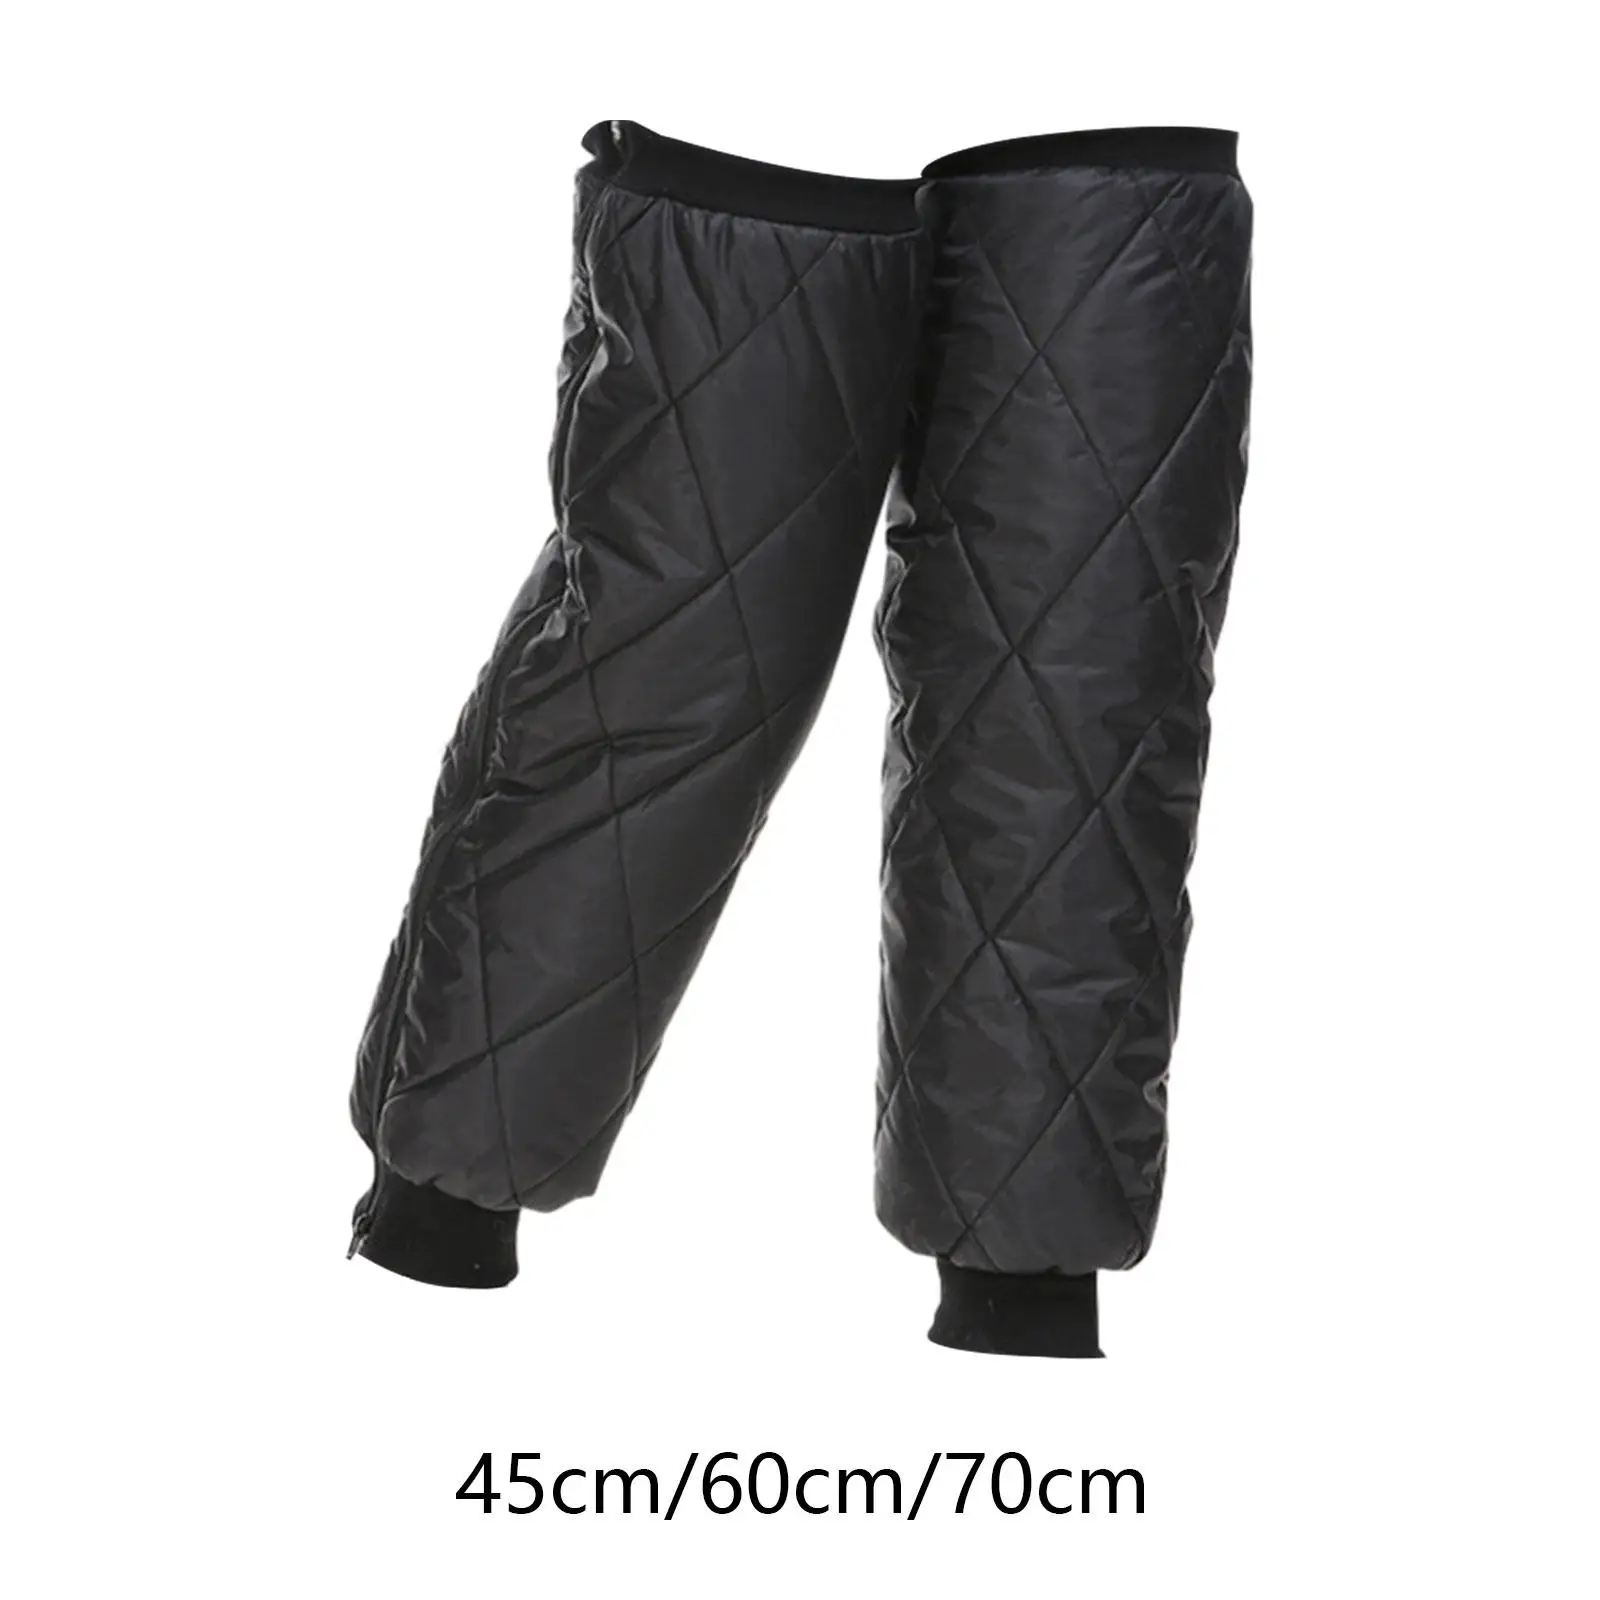 1 Pair Leg Warmers Thermal Protective Gear Windproof Leg Gaiter for Men Women Winter Working Mountain Biking Outdoor Activities